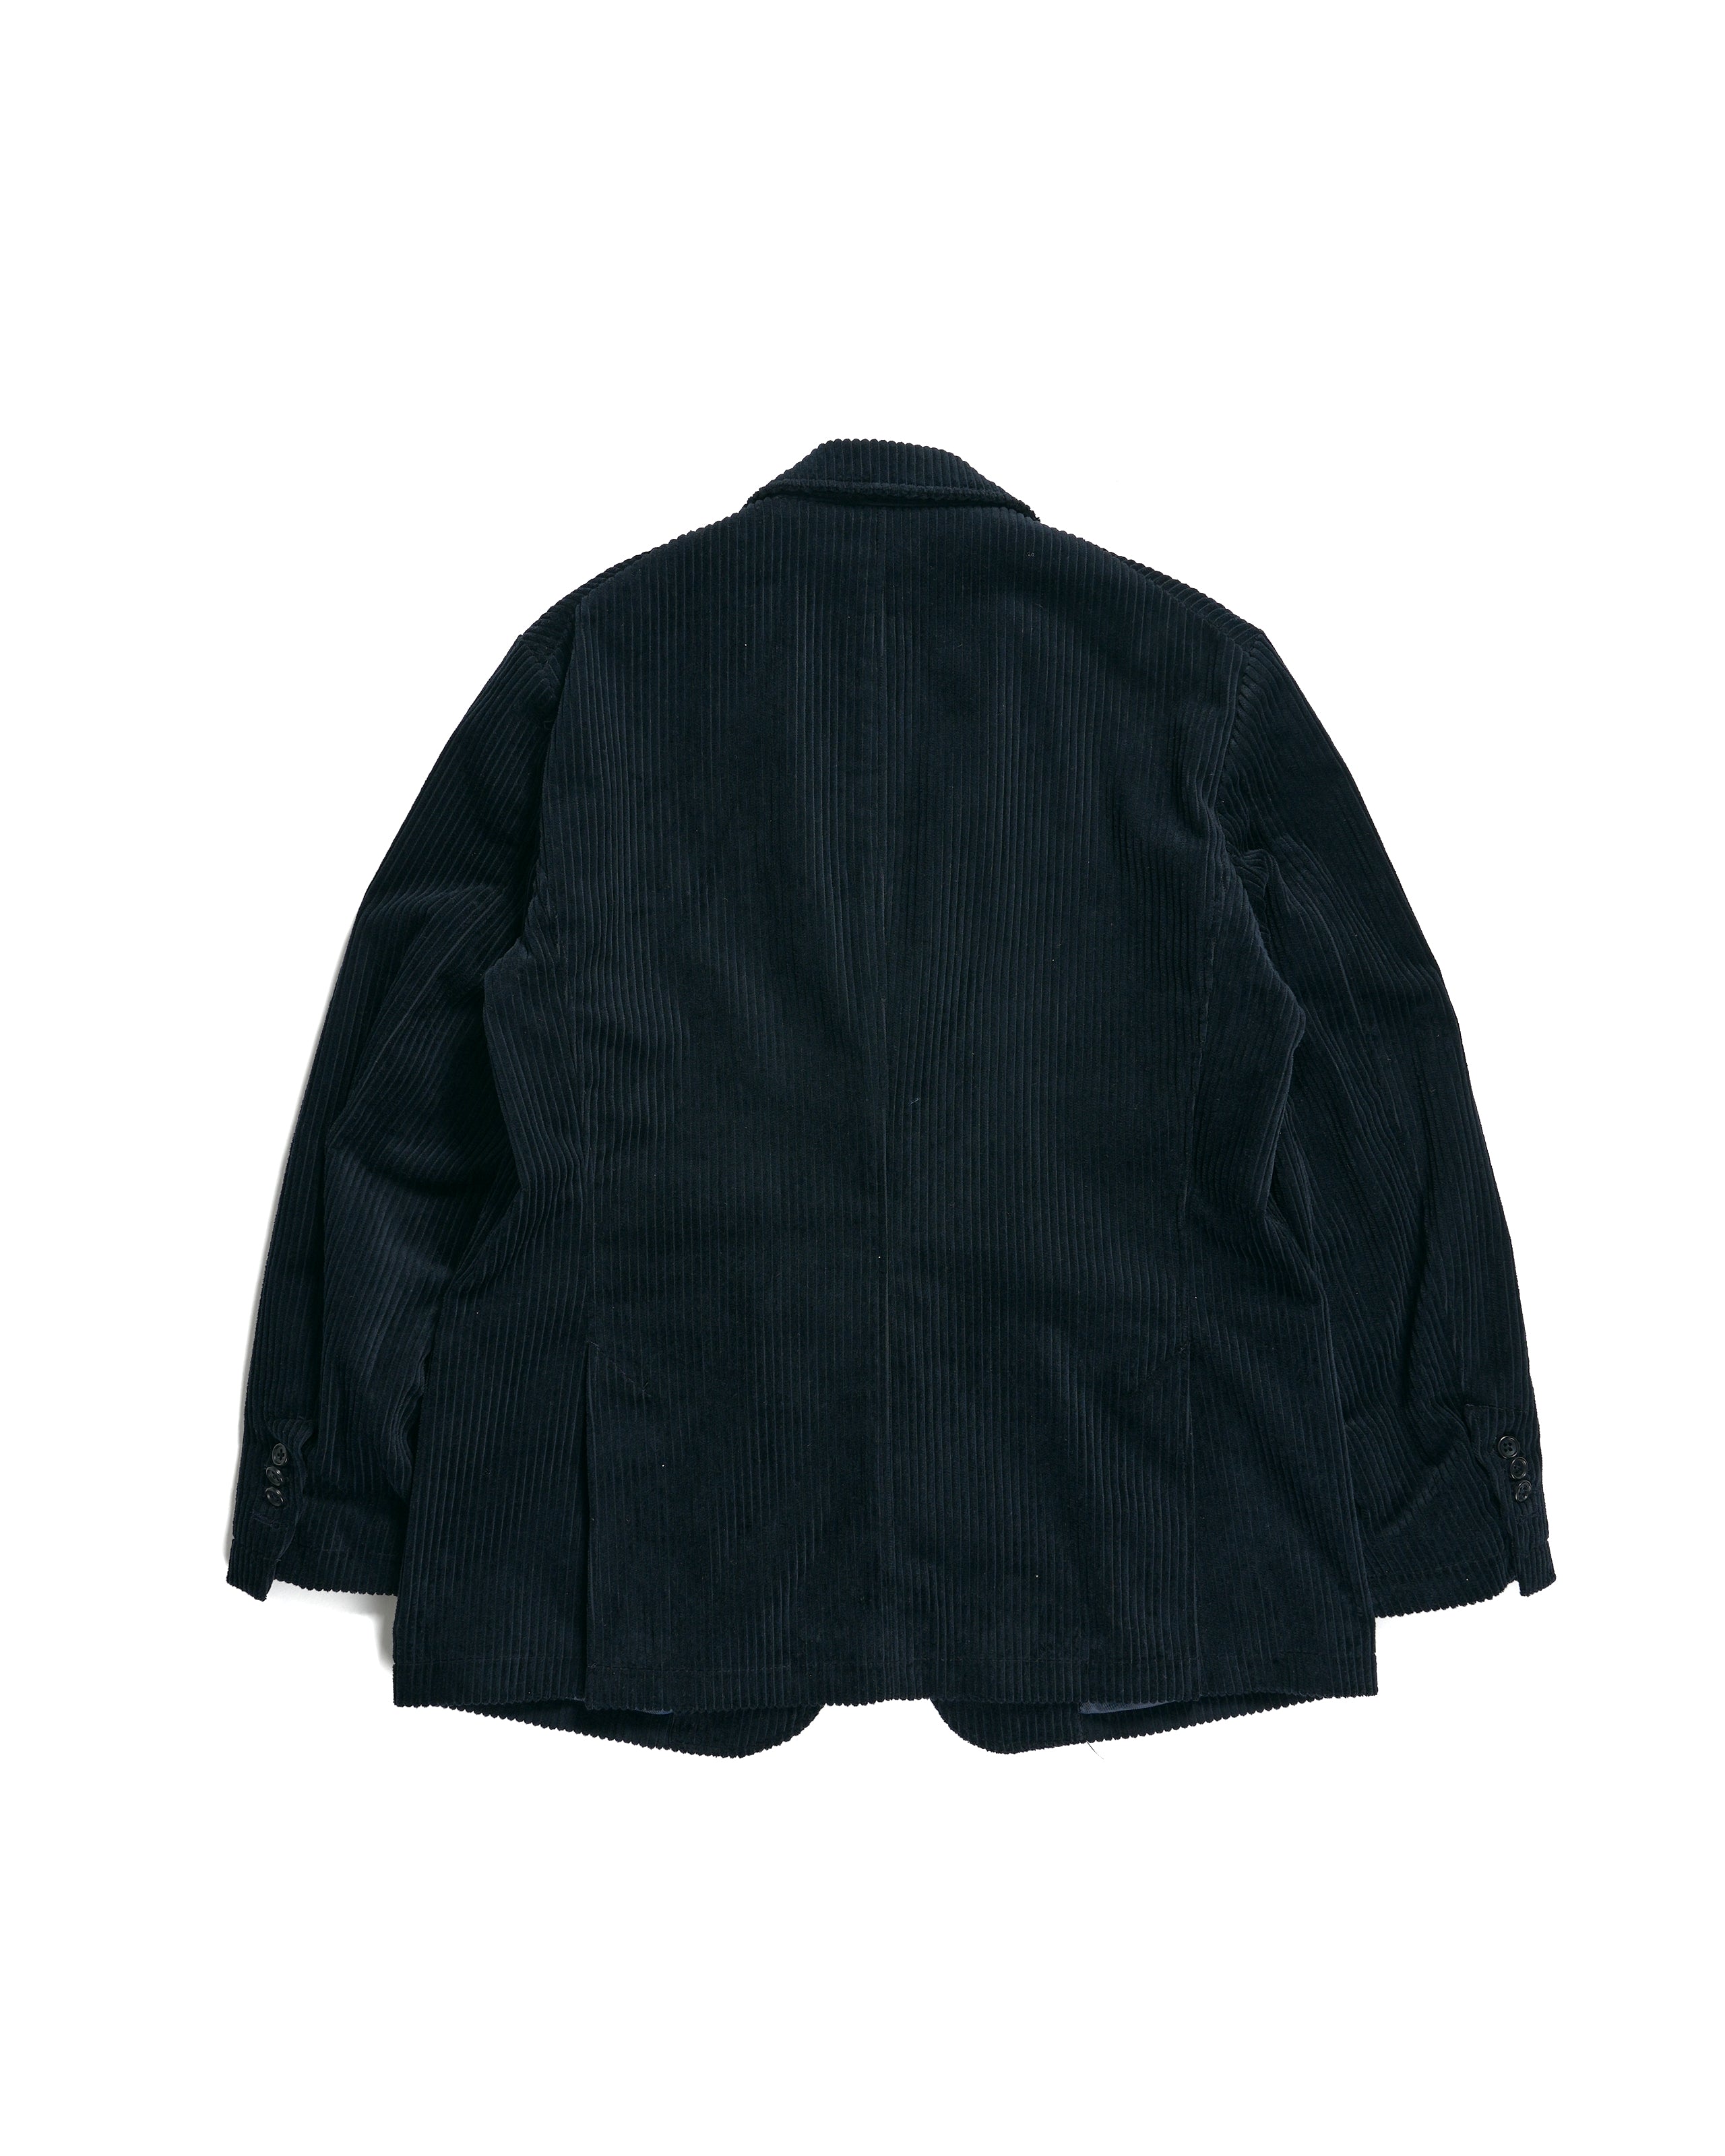 Andover Jacket - Dk. Navy Cotton 4.5W Corduroy